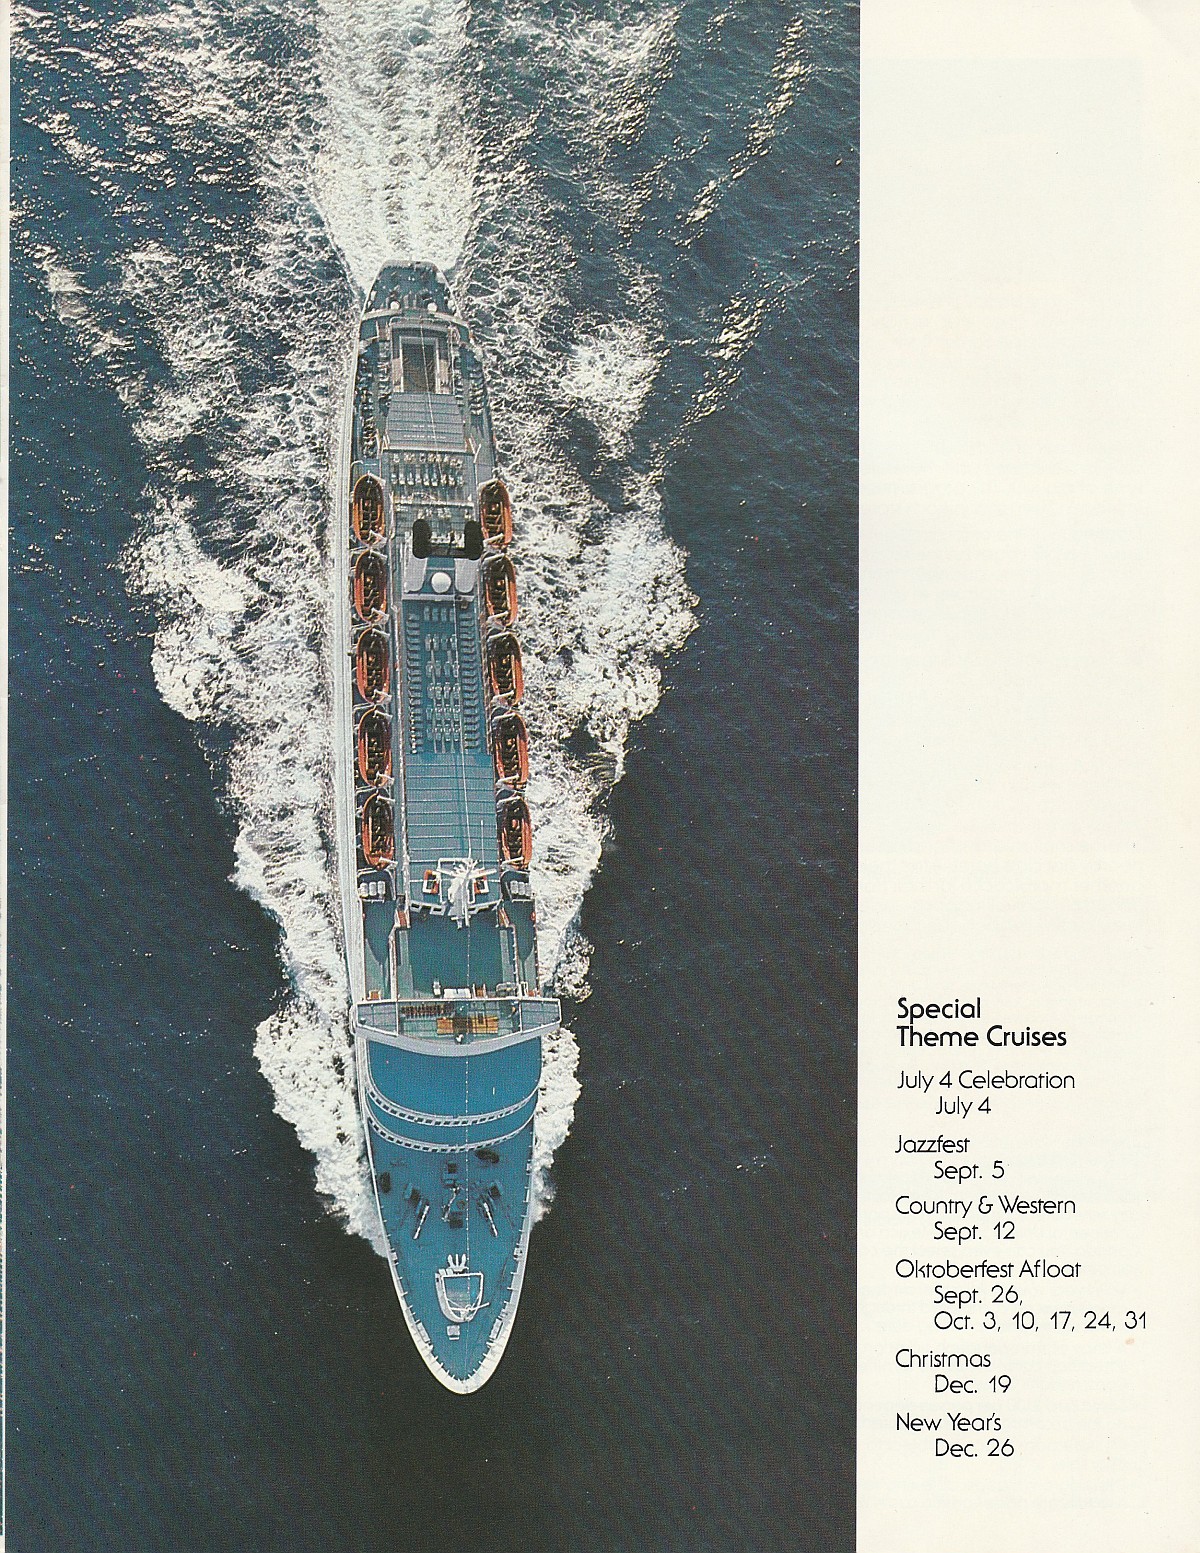 ms Boheme Special theme cruises: Overhead view of ms Boheme